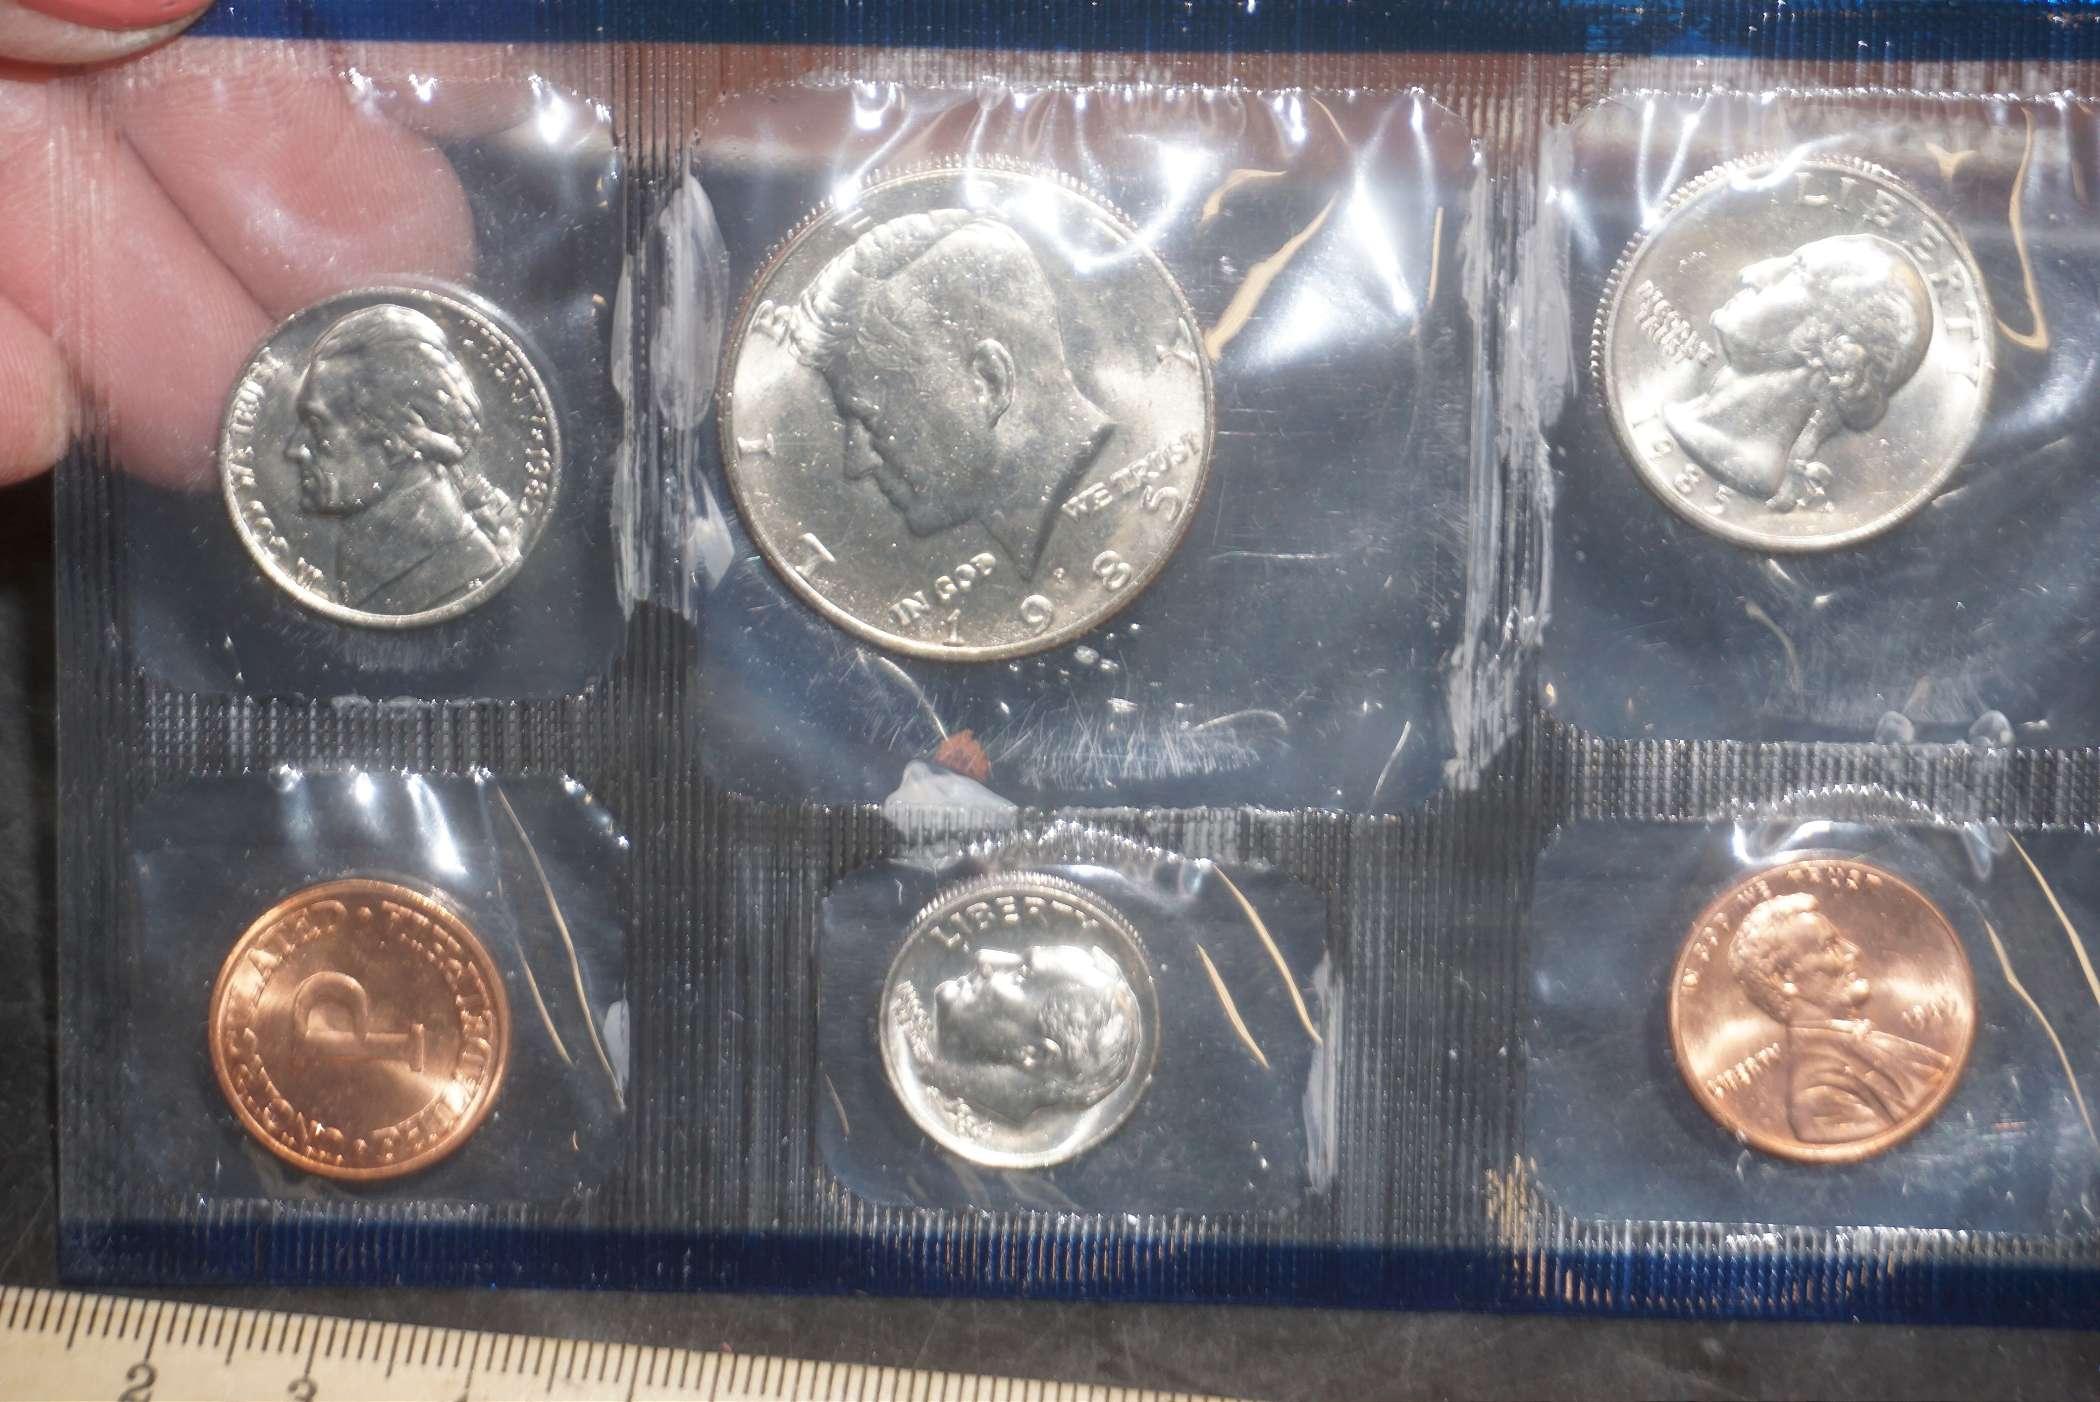 1985 U.S. Mint Uncirculated Coin Set